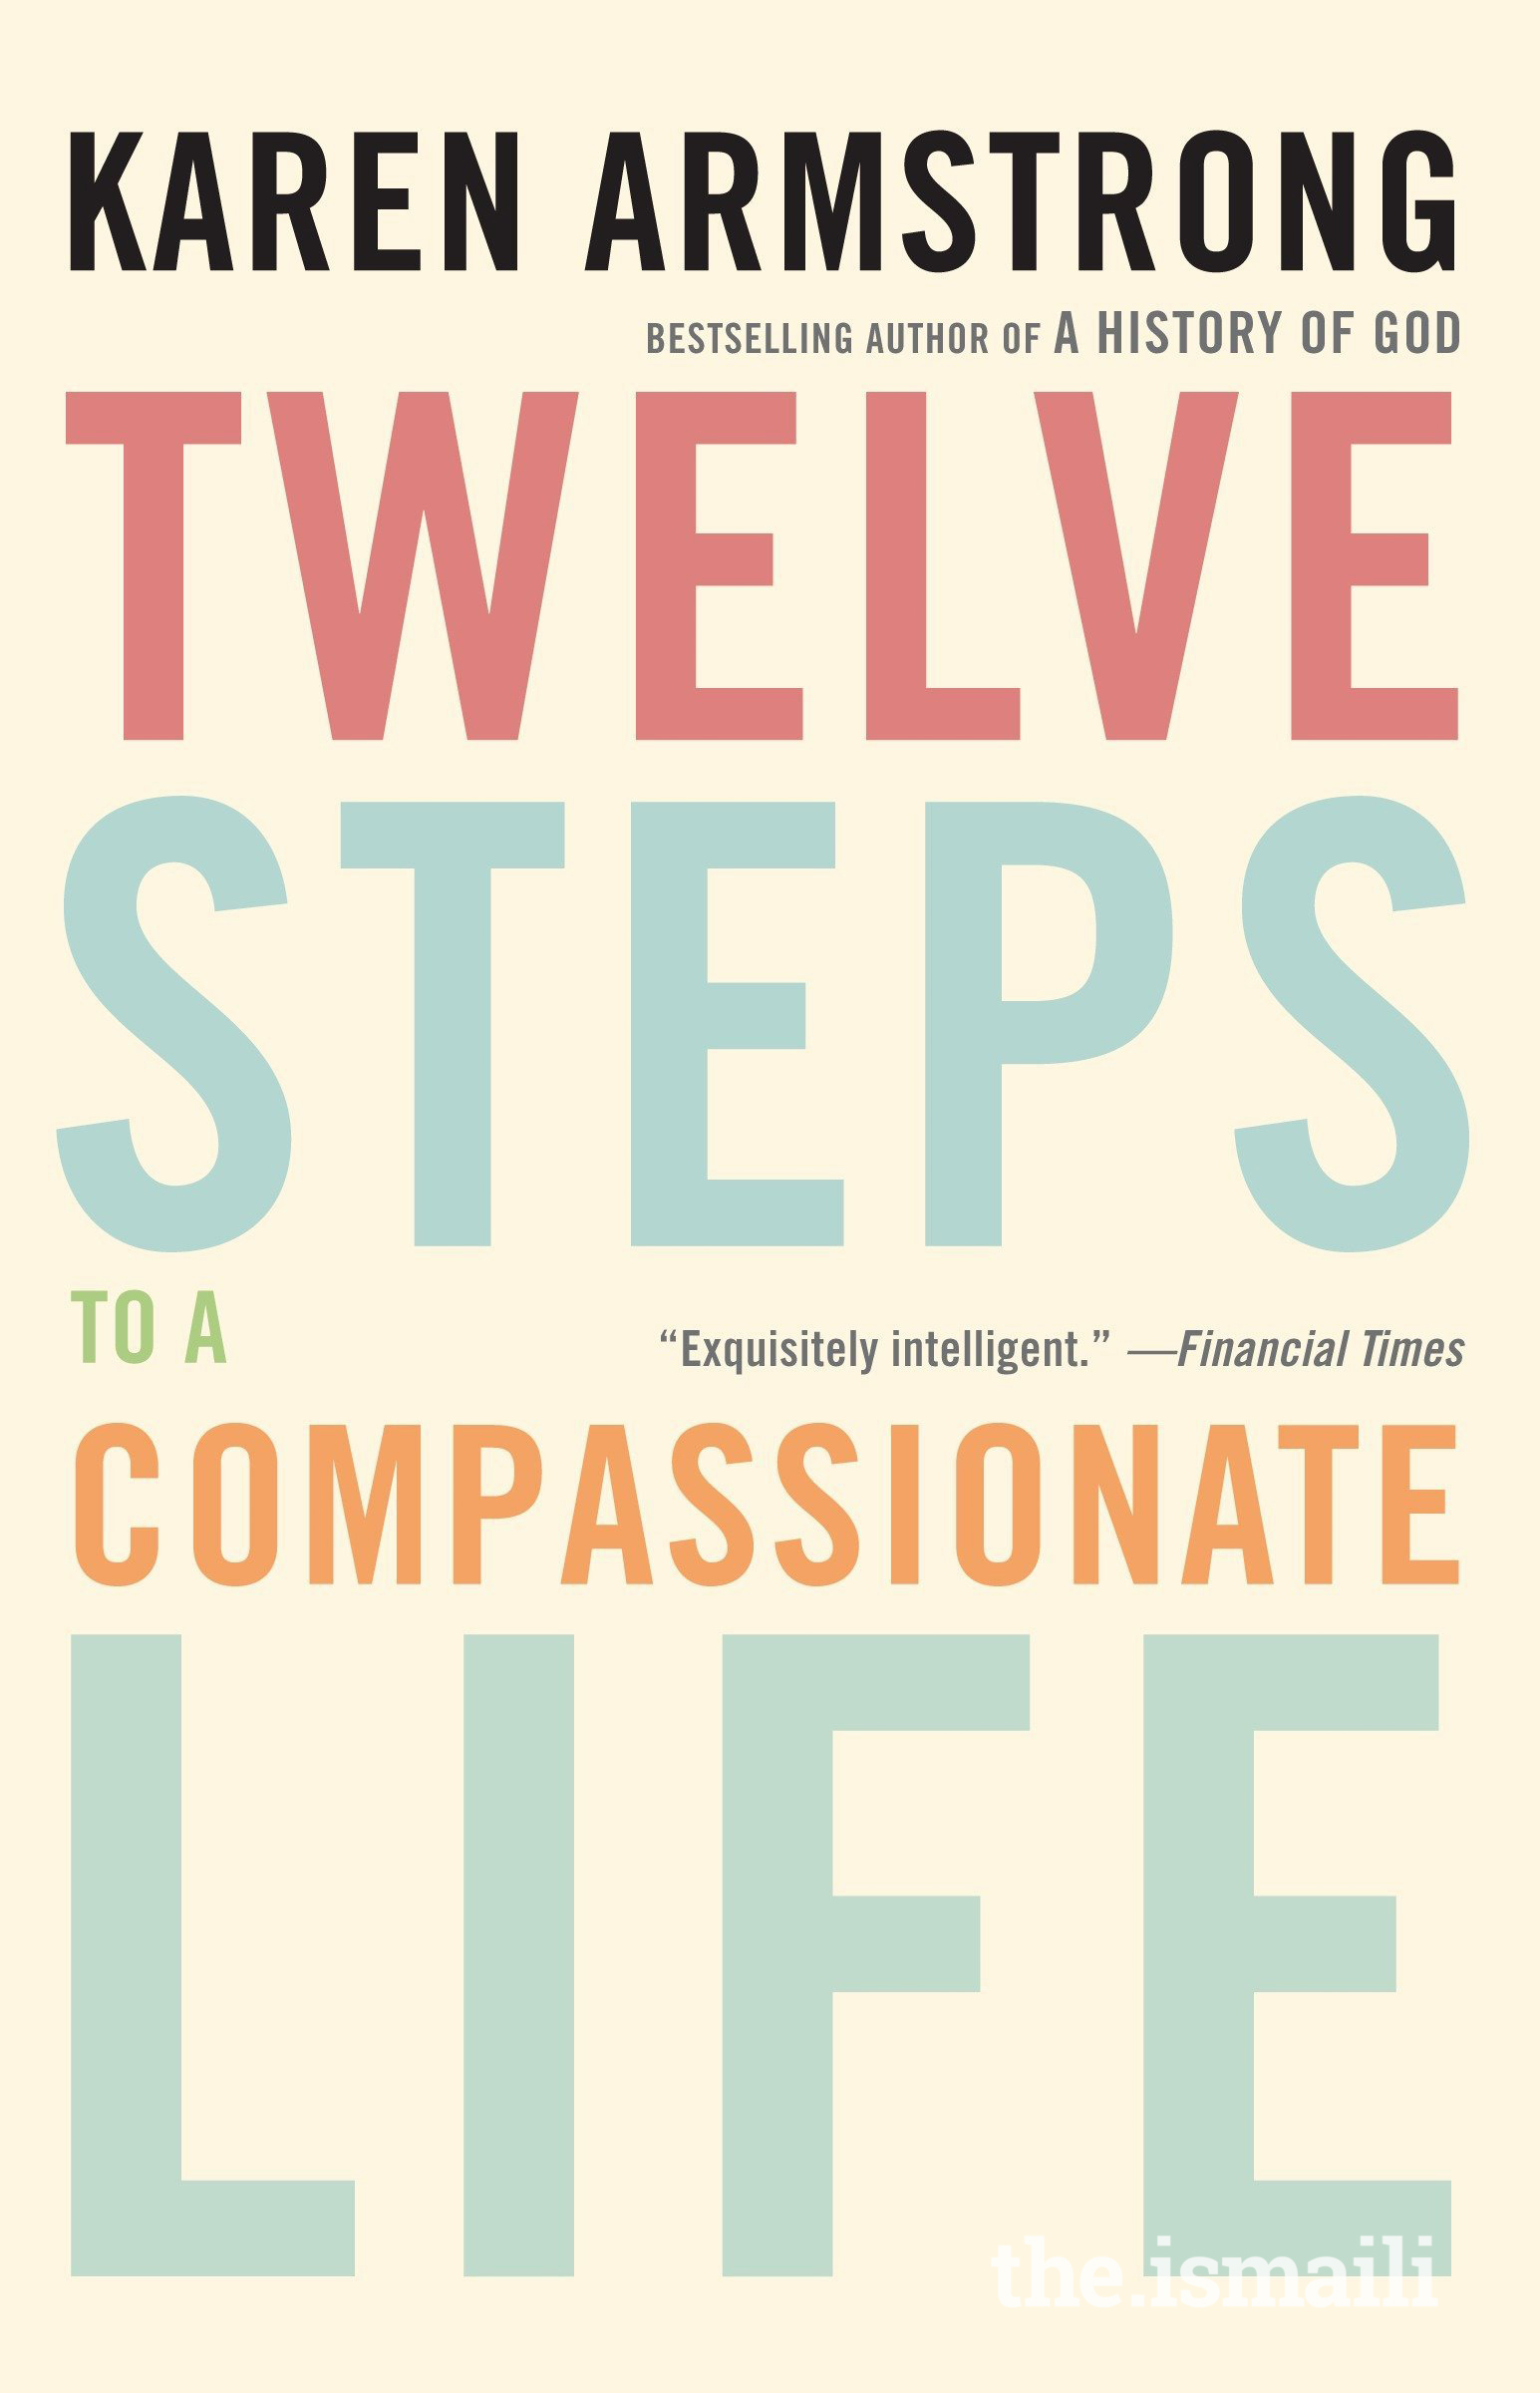 "Twelve Steps to a Compassionate Life"